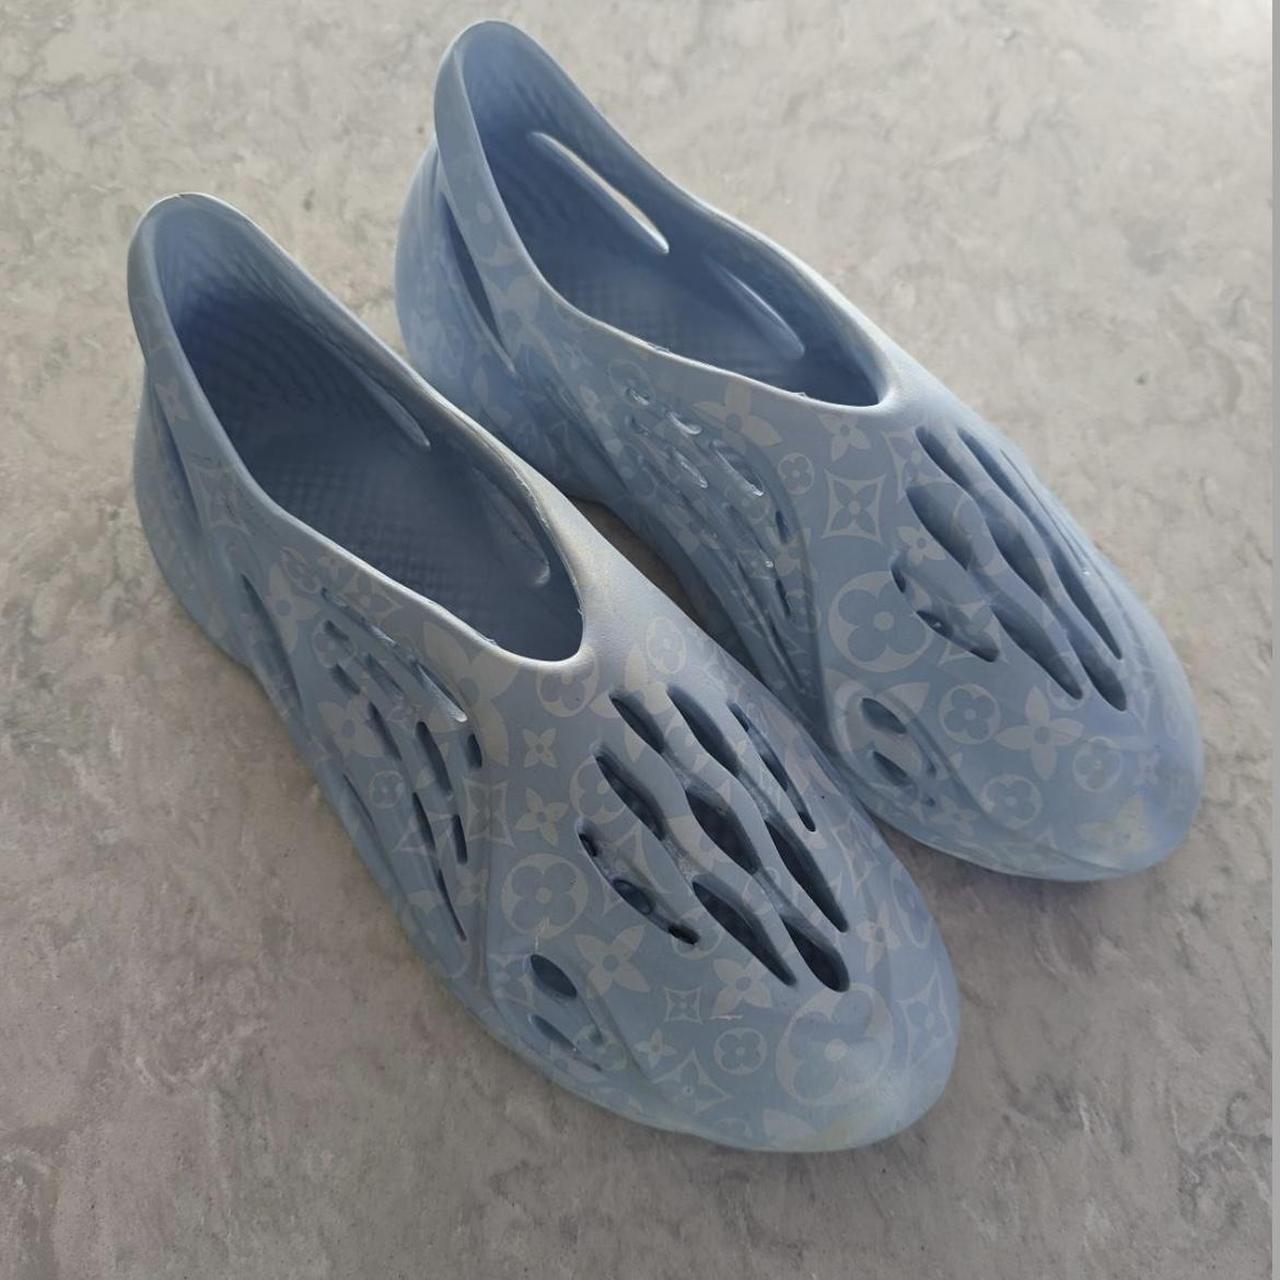 Imran Potato Men's Sneakers - Blue - US 13